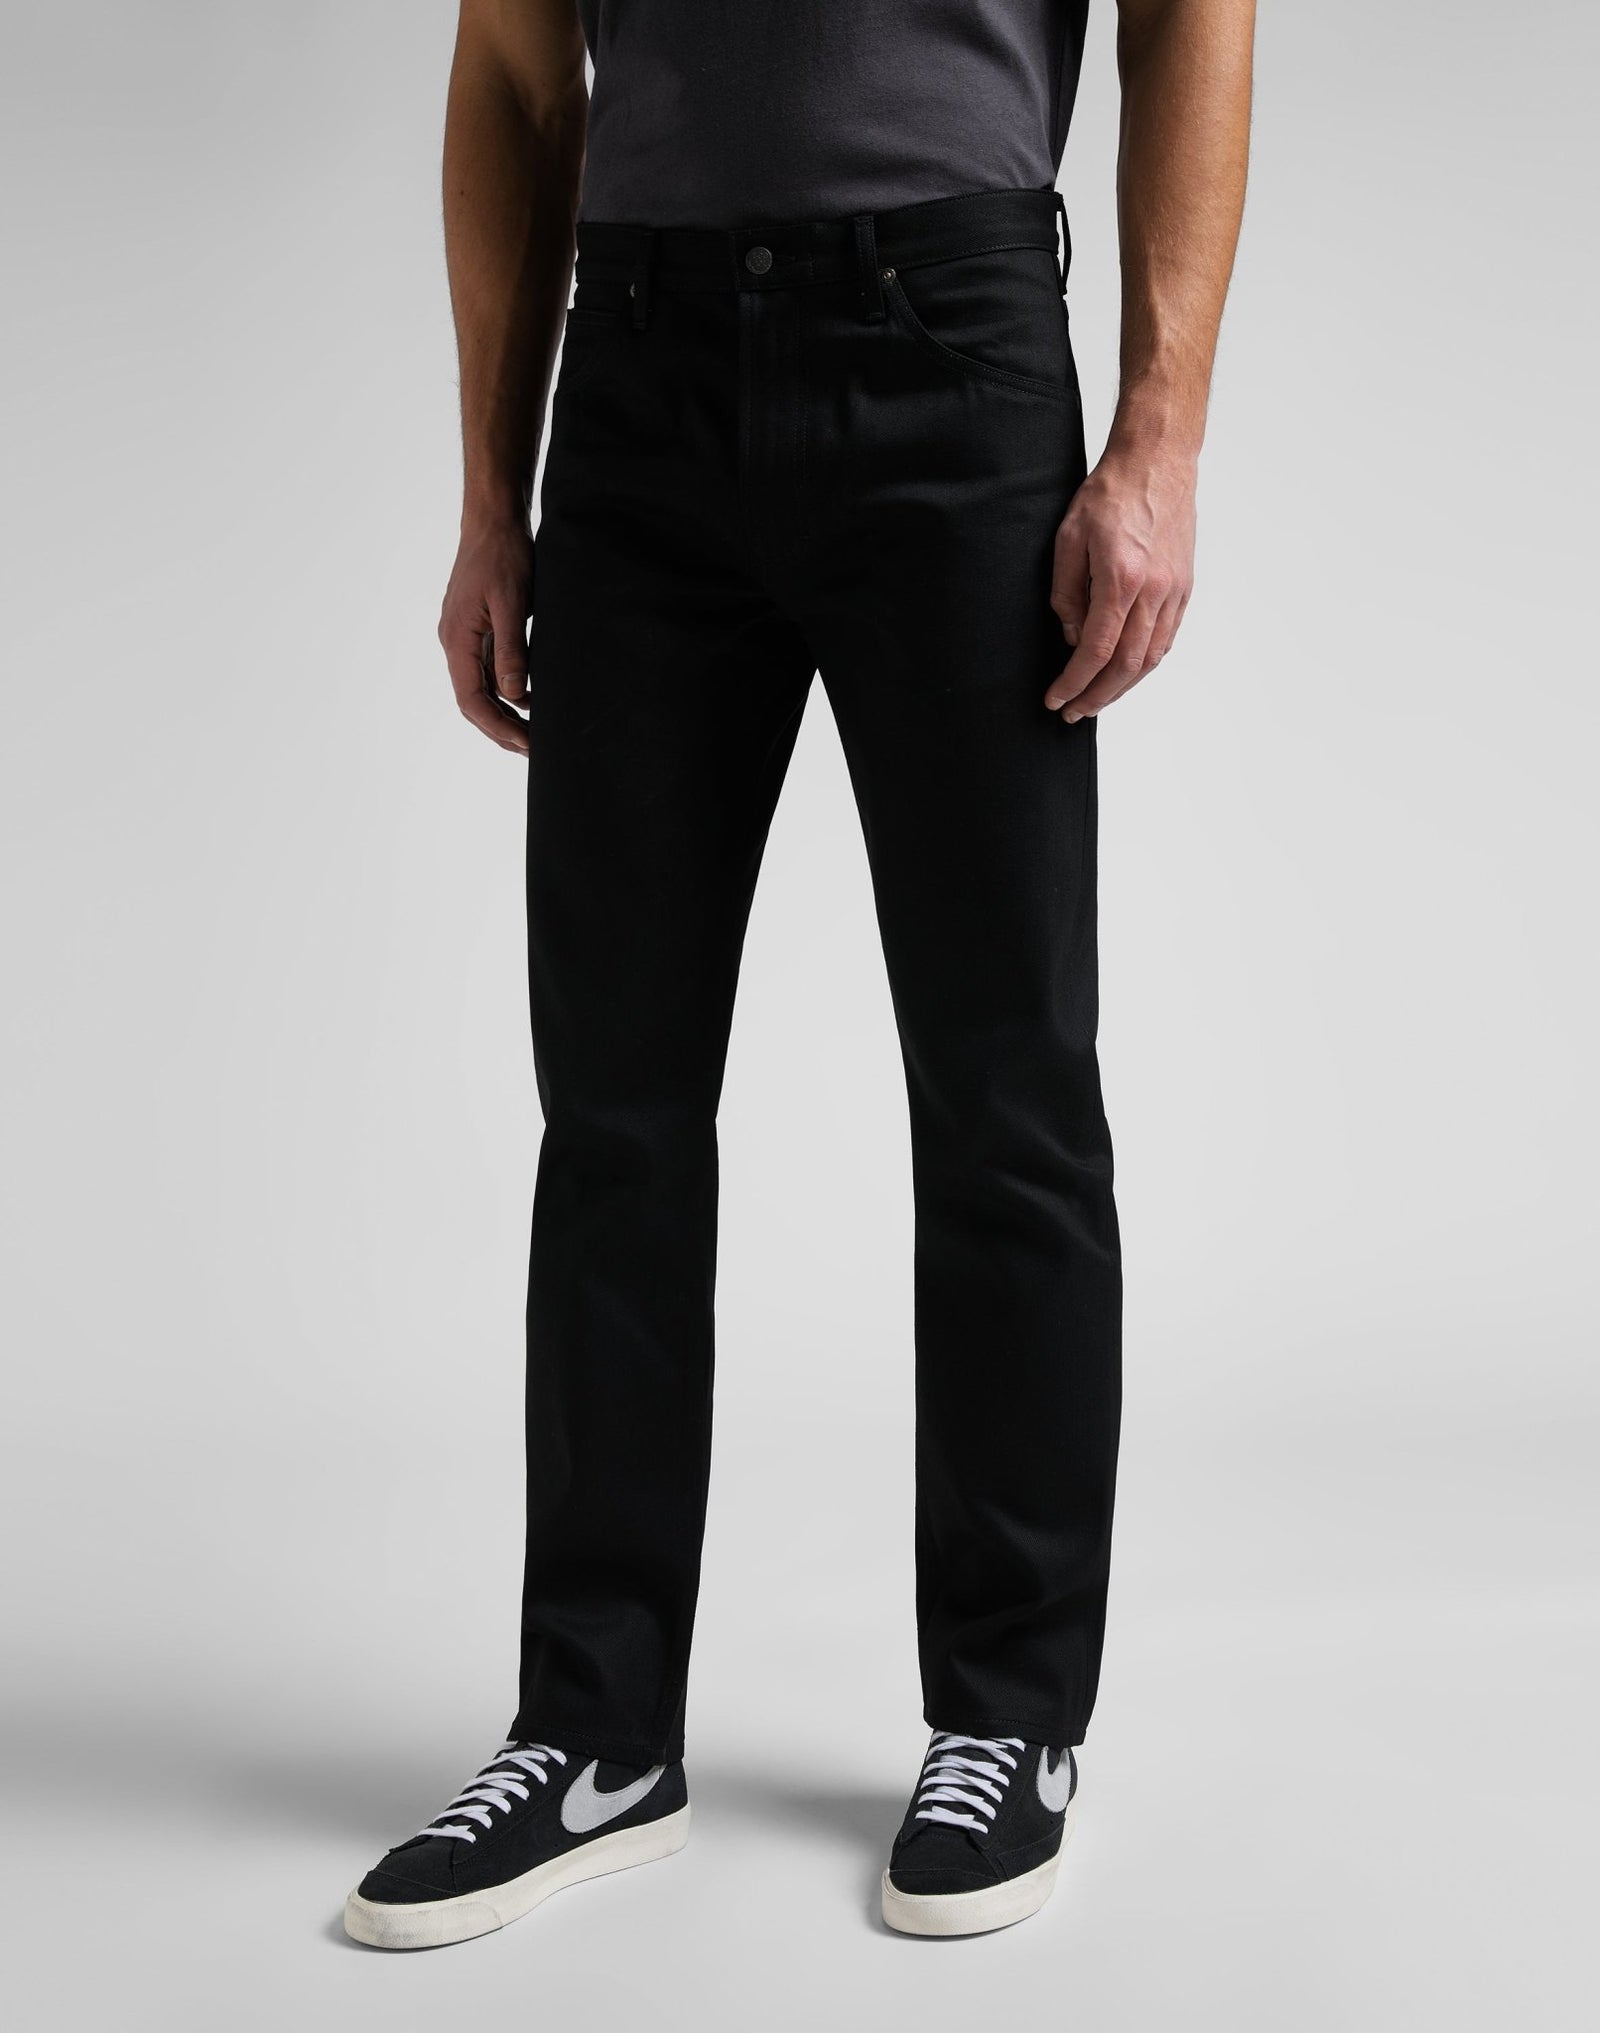 Lee Z-One Tapered Leg Skinny Jeans Black | MYER